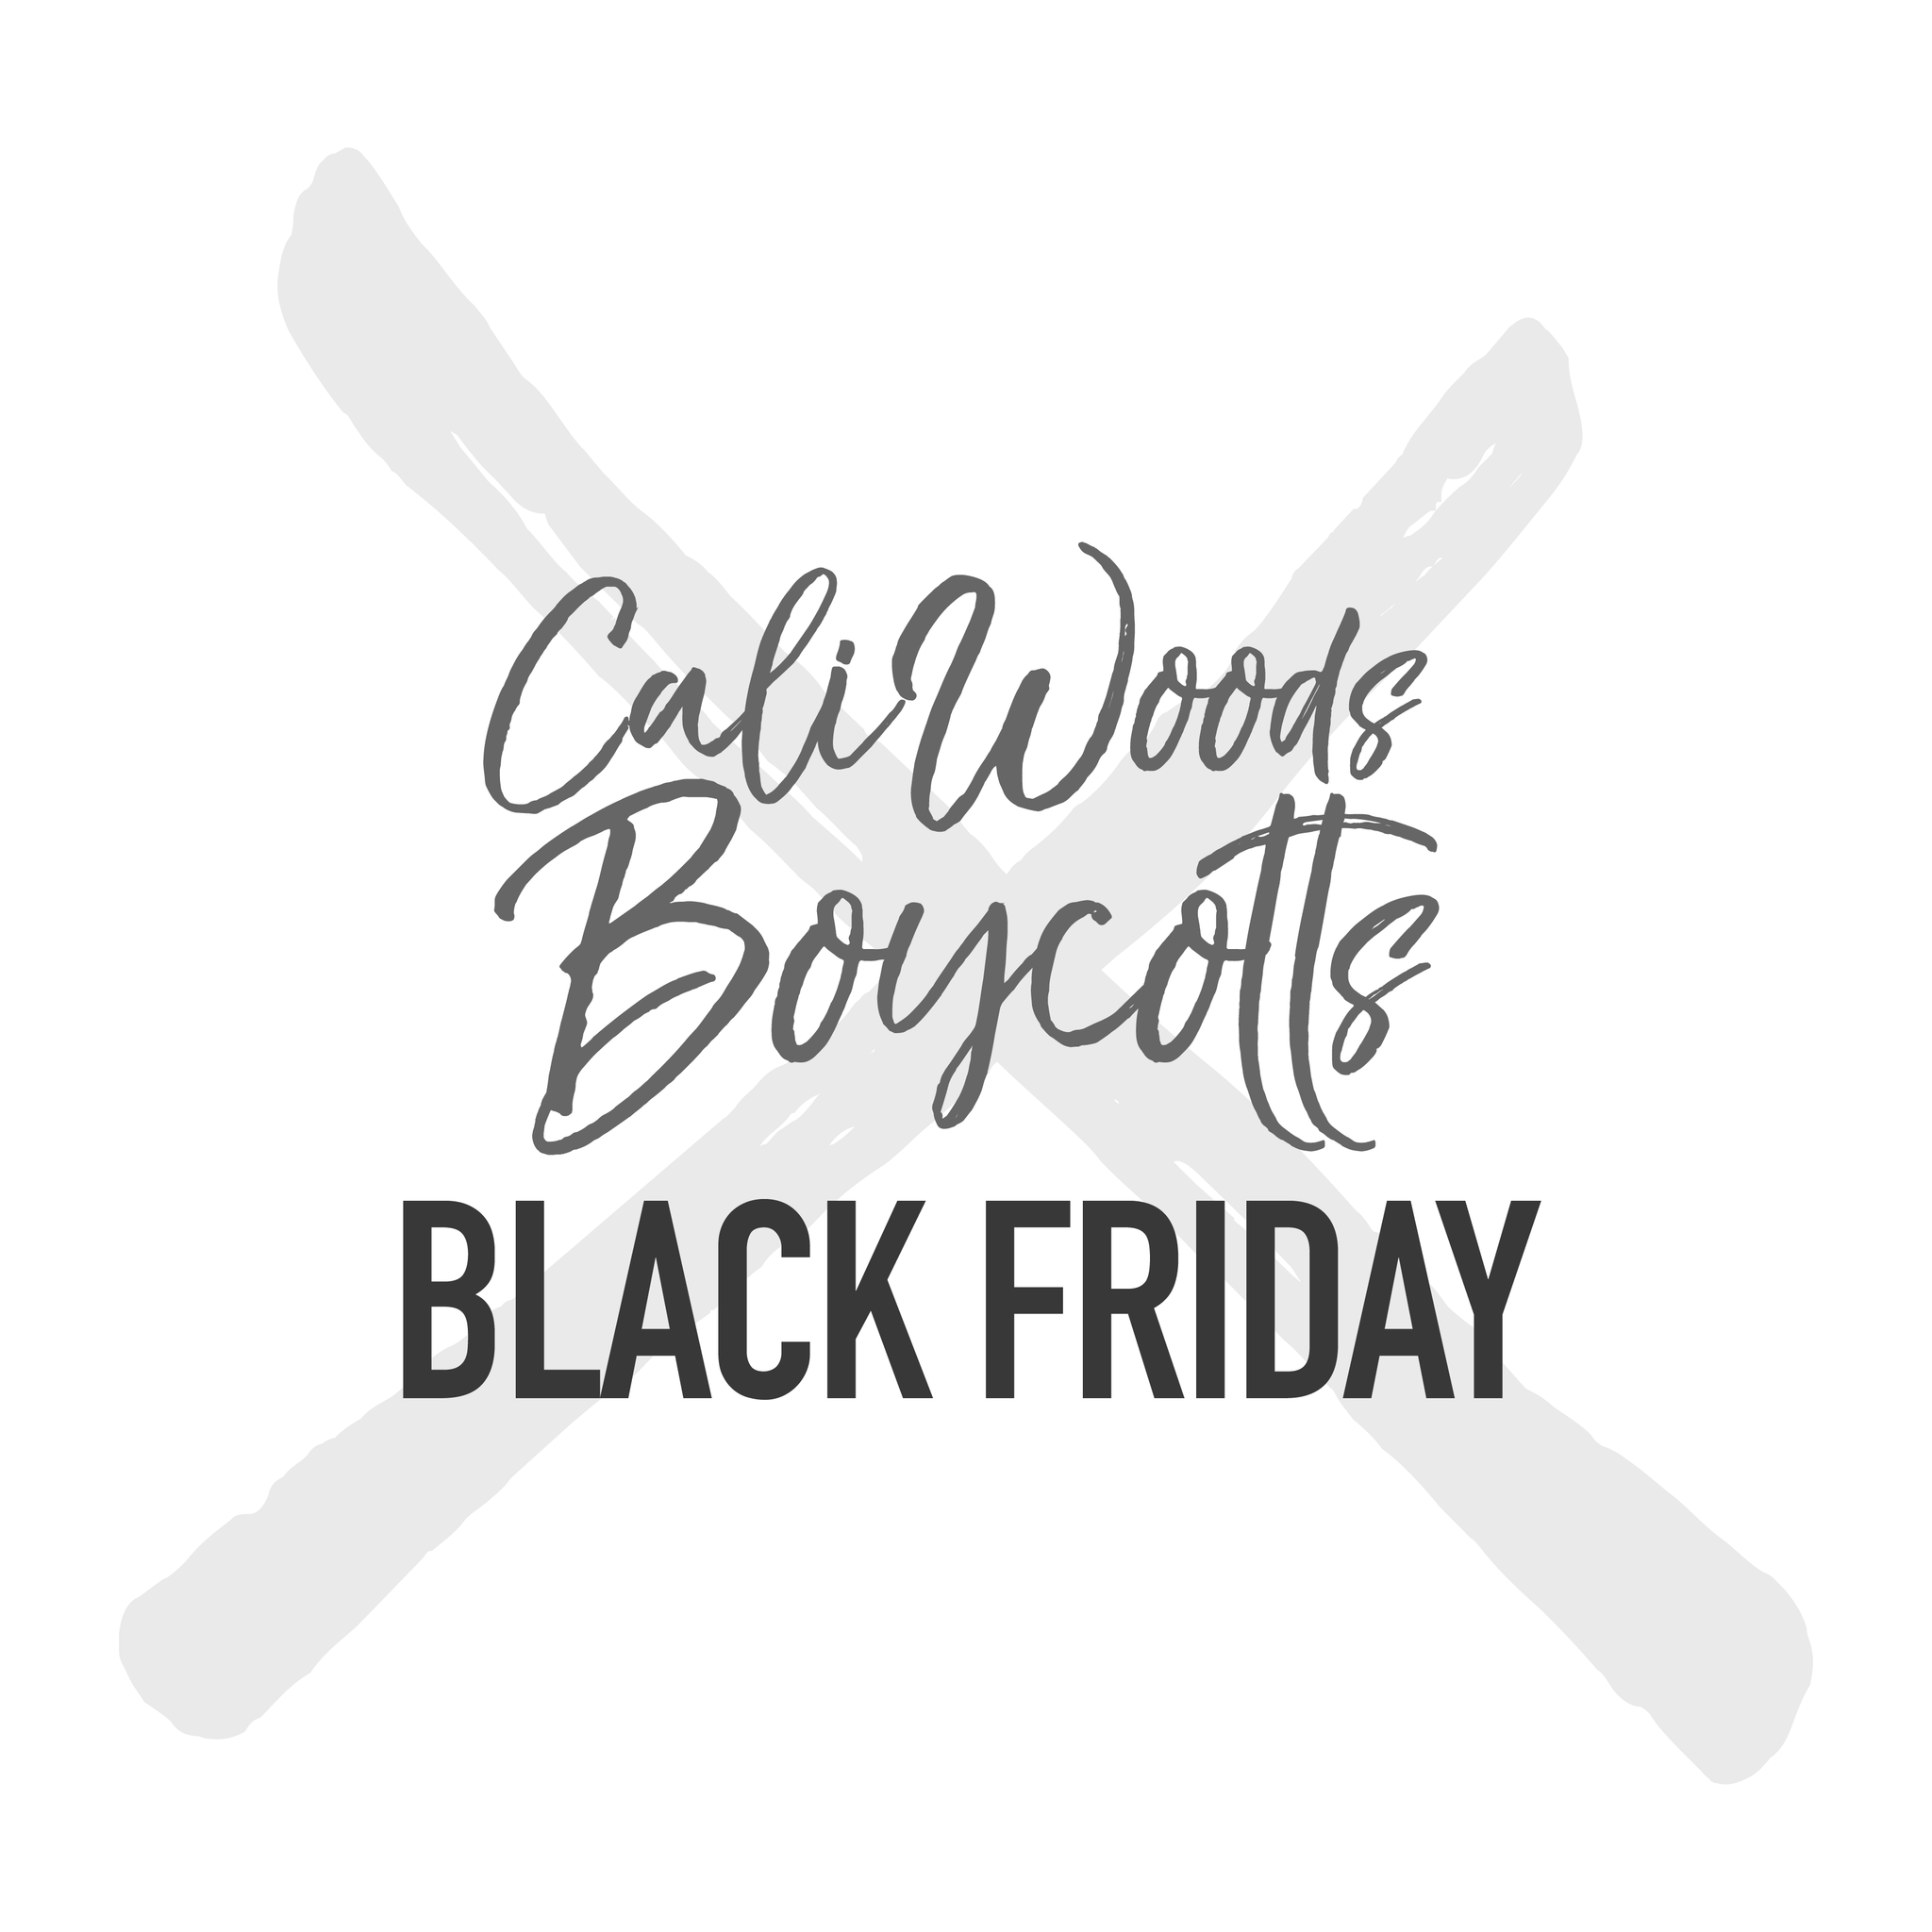 CaliWoods Boycotts Black Friday! Here's why...